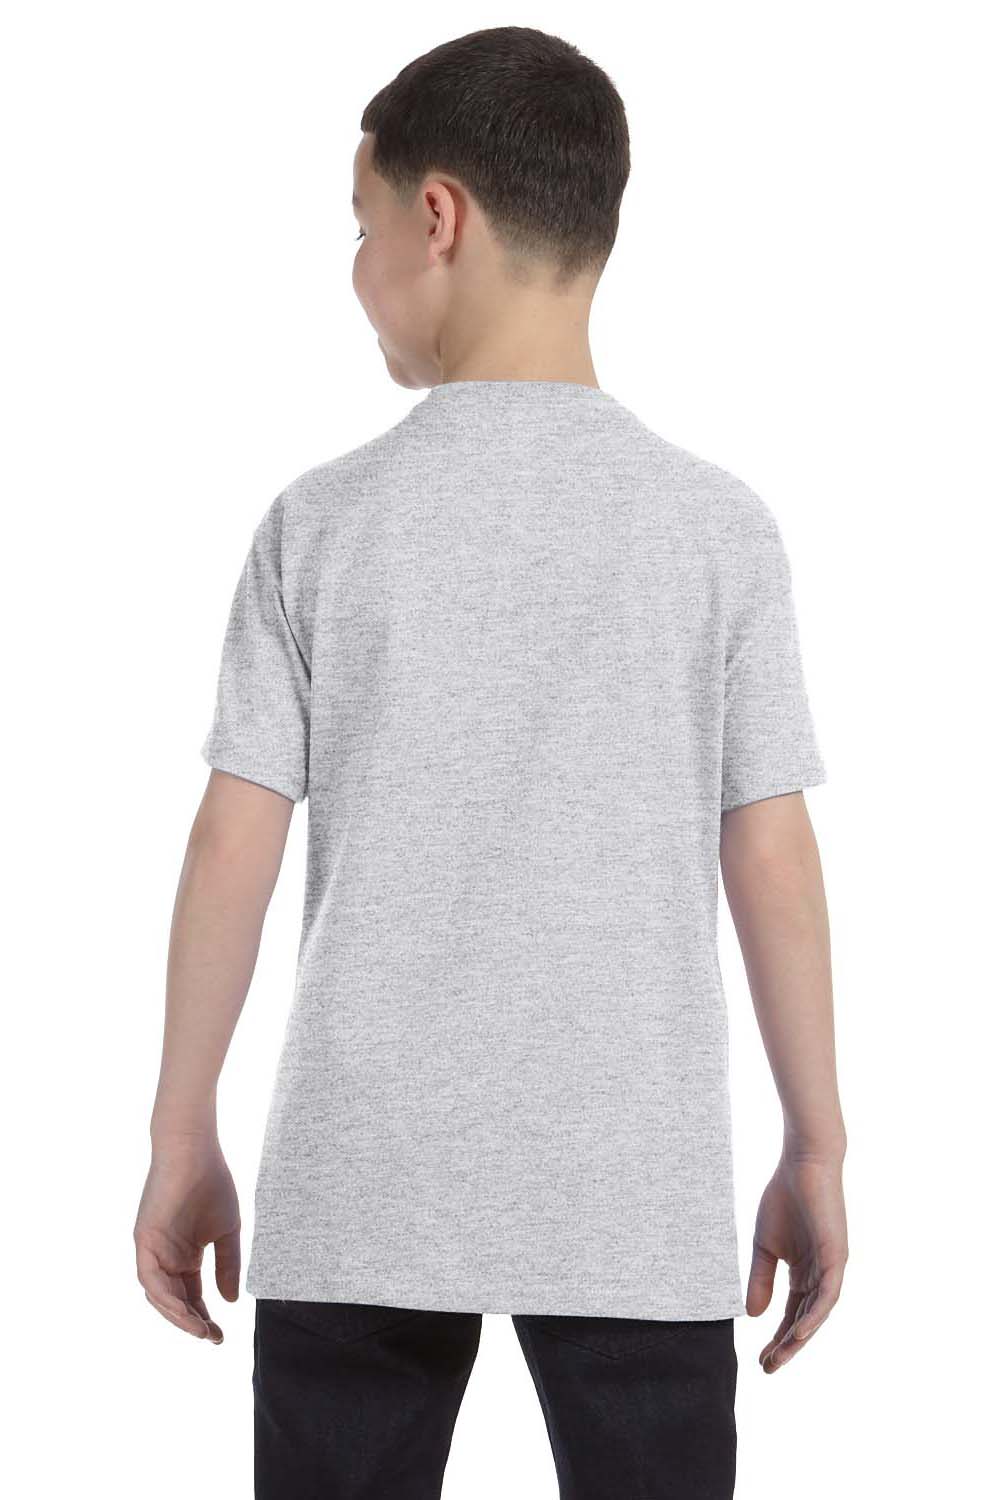 Jerzees 29B Youth Dri-Power Moisture Wicking Short Sleeve Crewneck T-Shirt Ash Grey Back